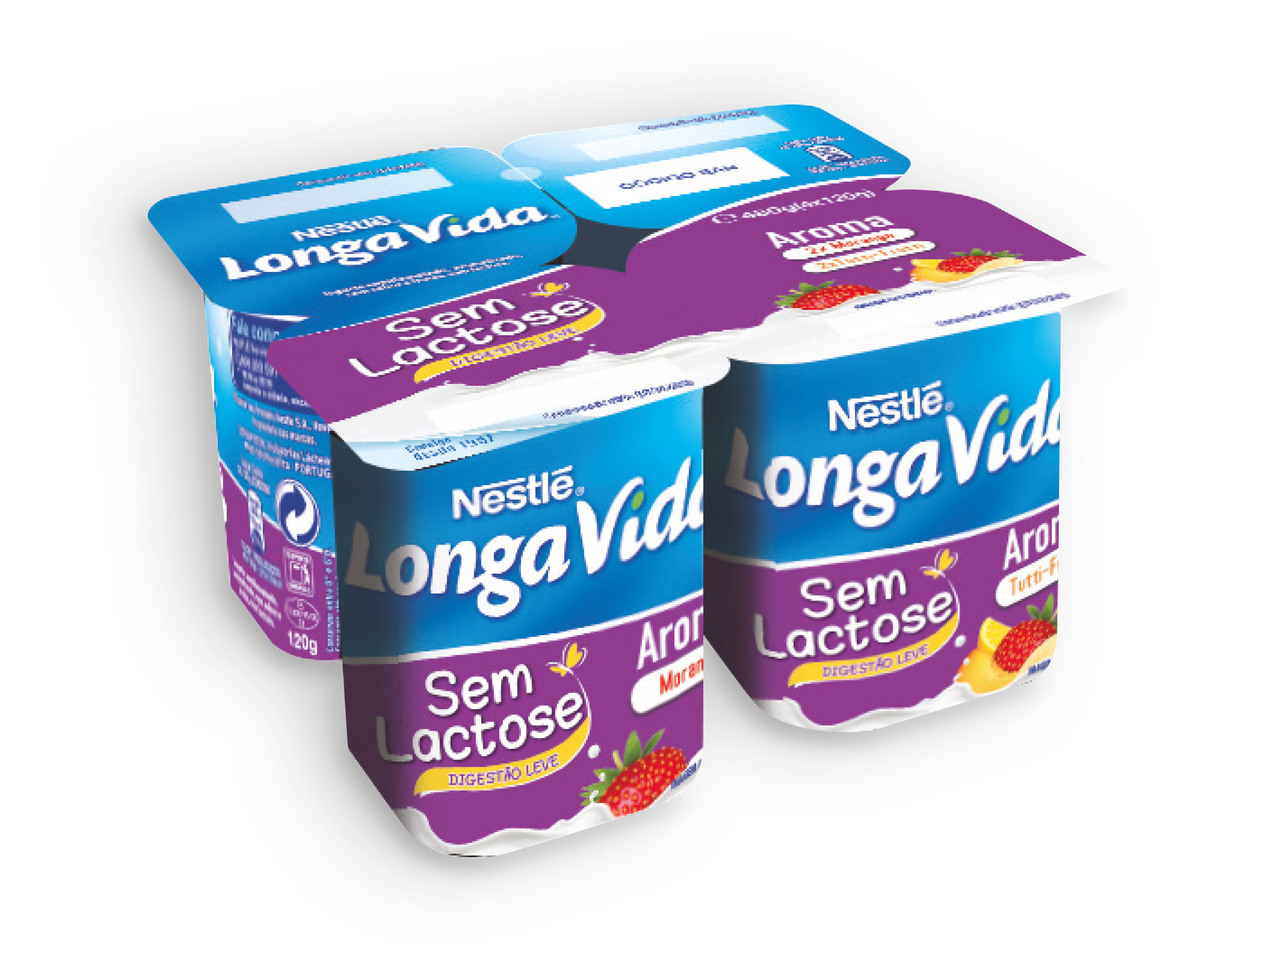 LONGA VIDA(R) Iogurte de Aroma Sem Lactose Tutti Frutti-Morango